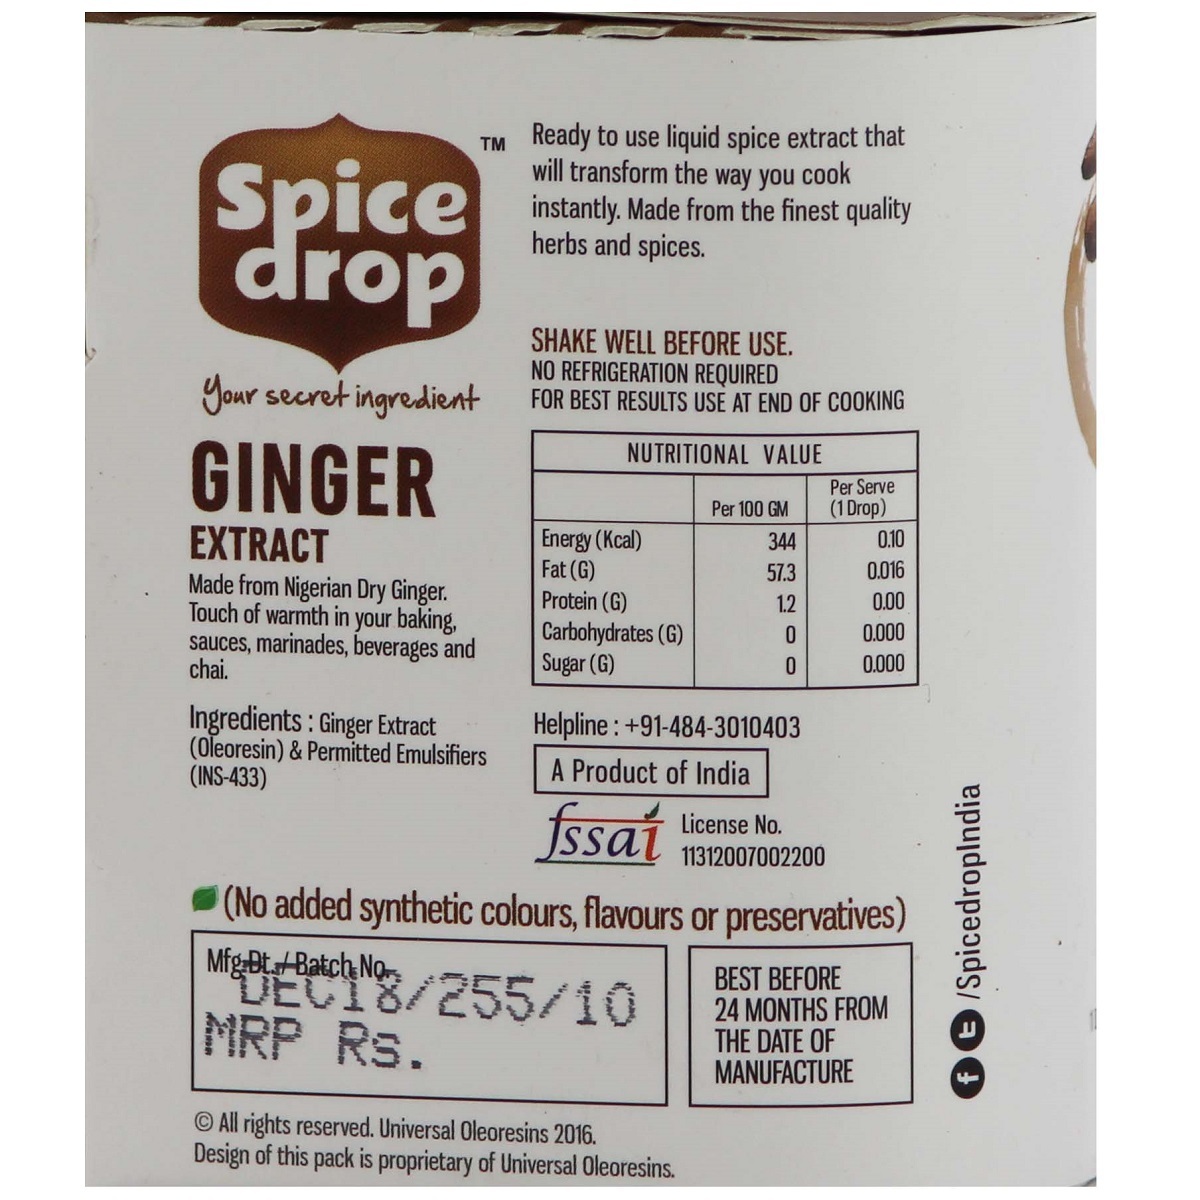 Spice Drop Ginger Drop 5ml